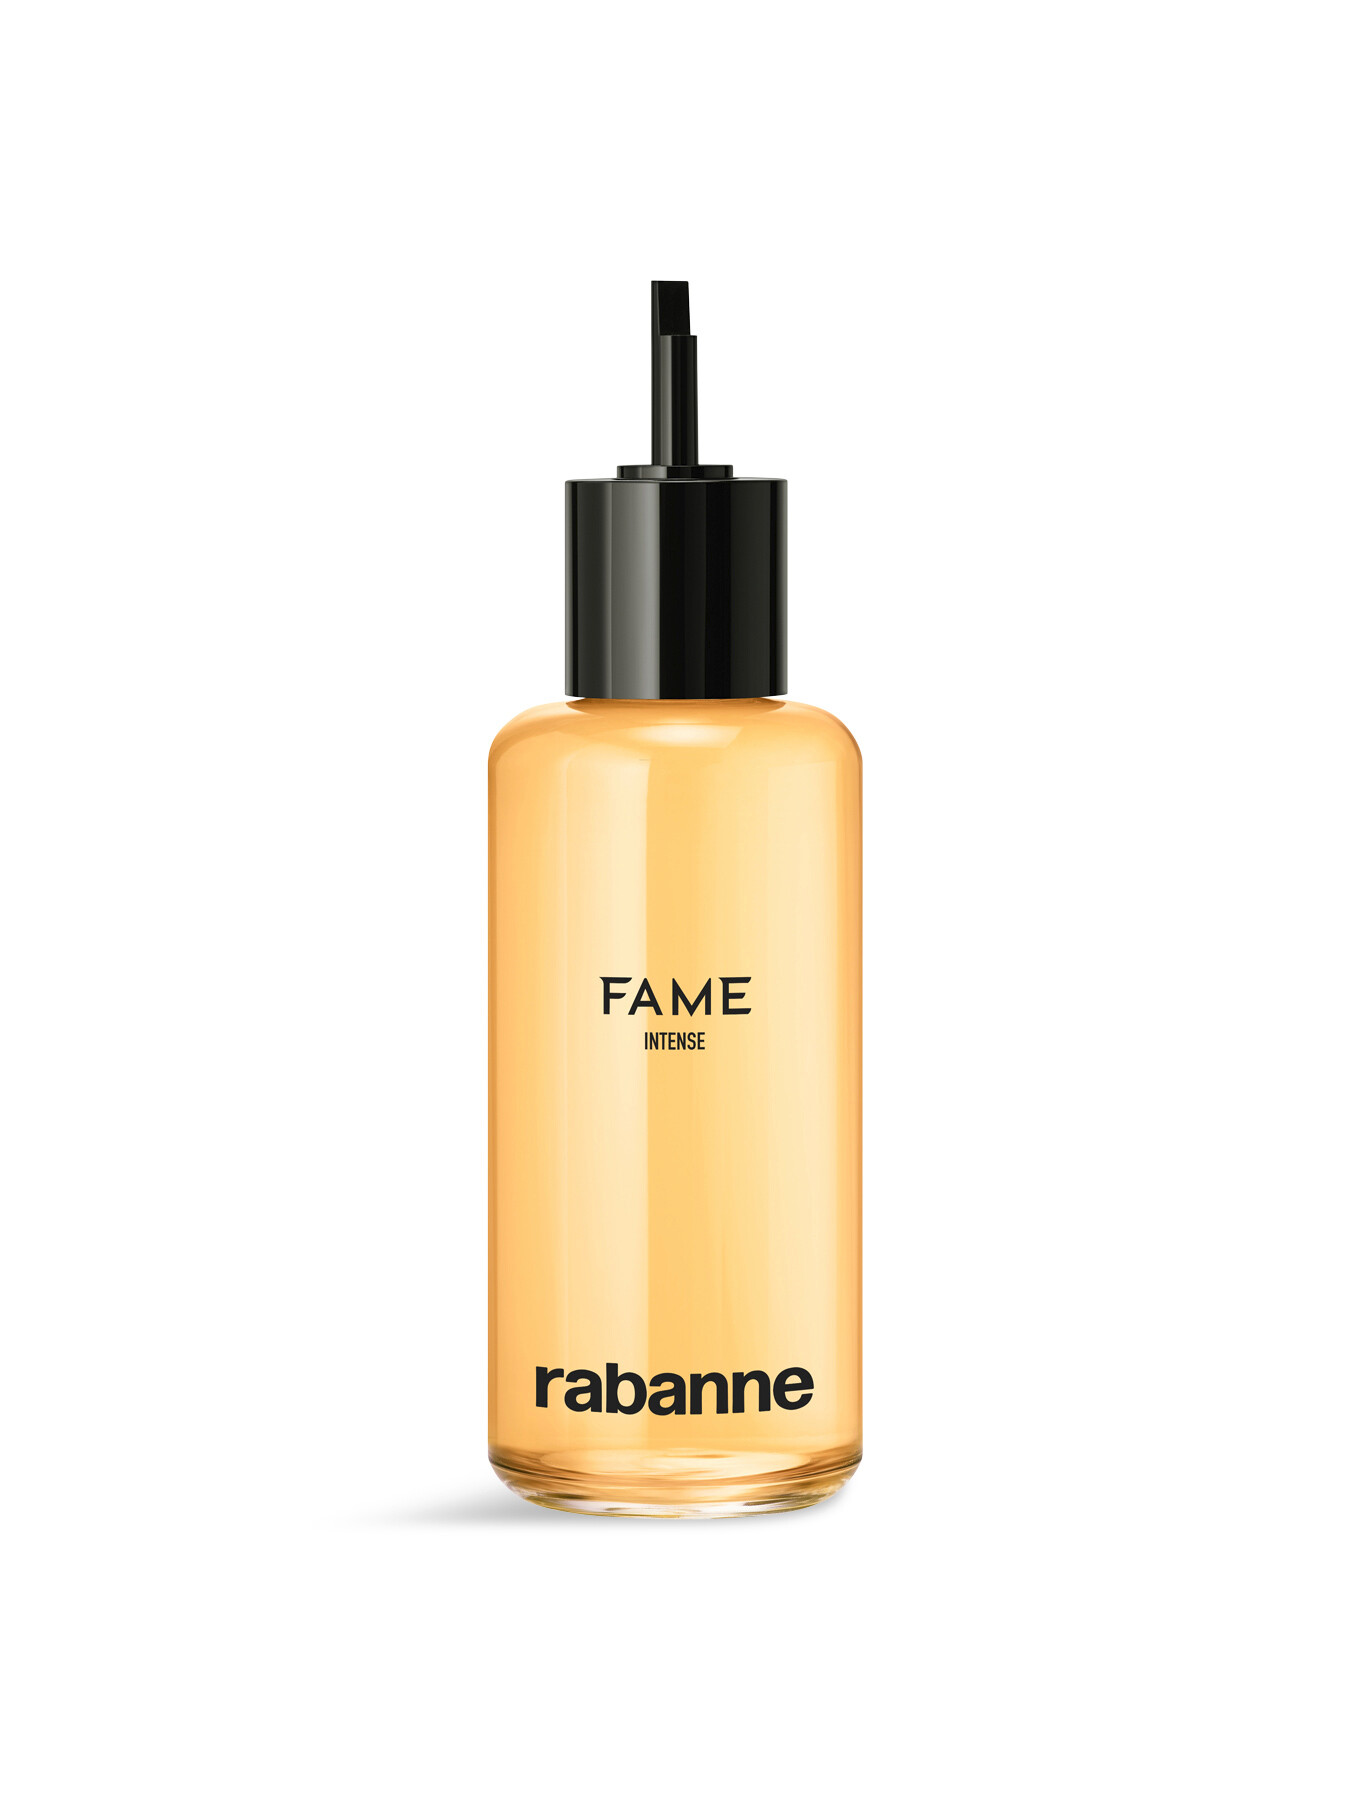 Rabanne Fame Intense Eau De Parfum 200ml Refill In White